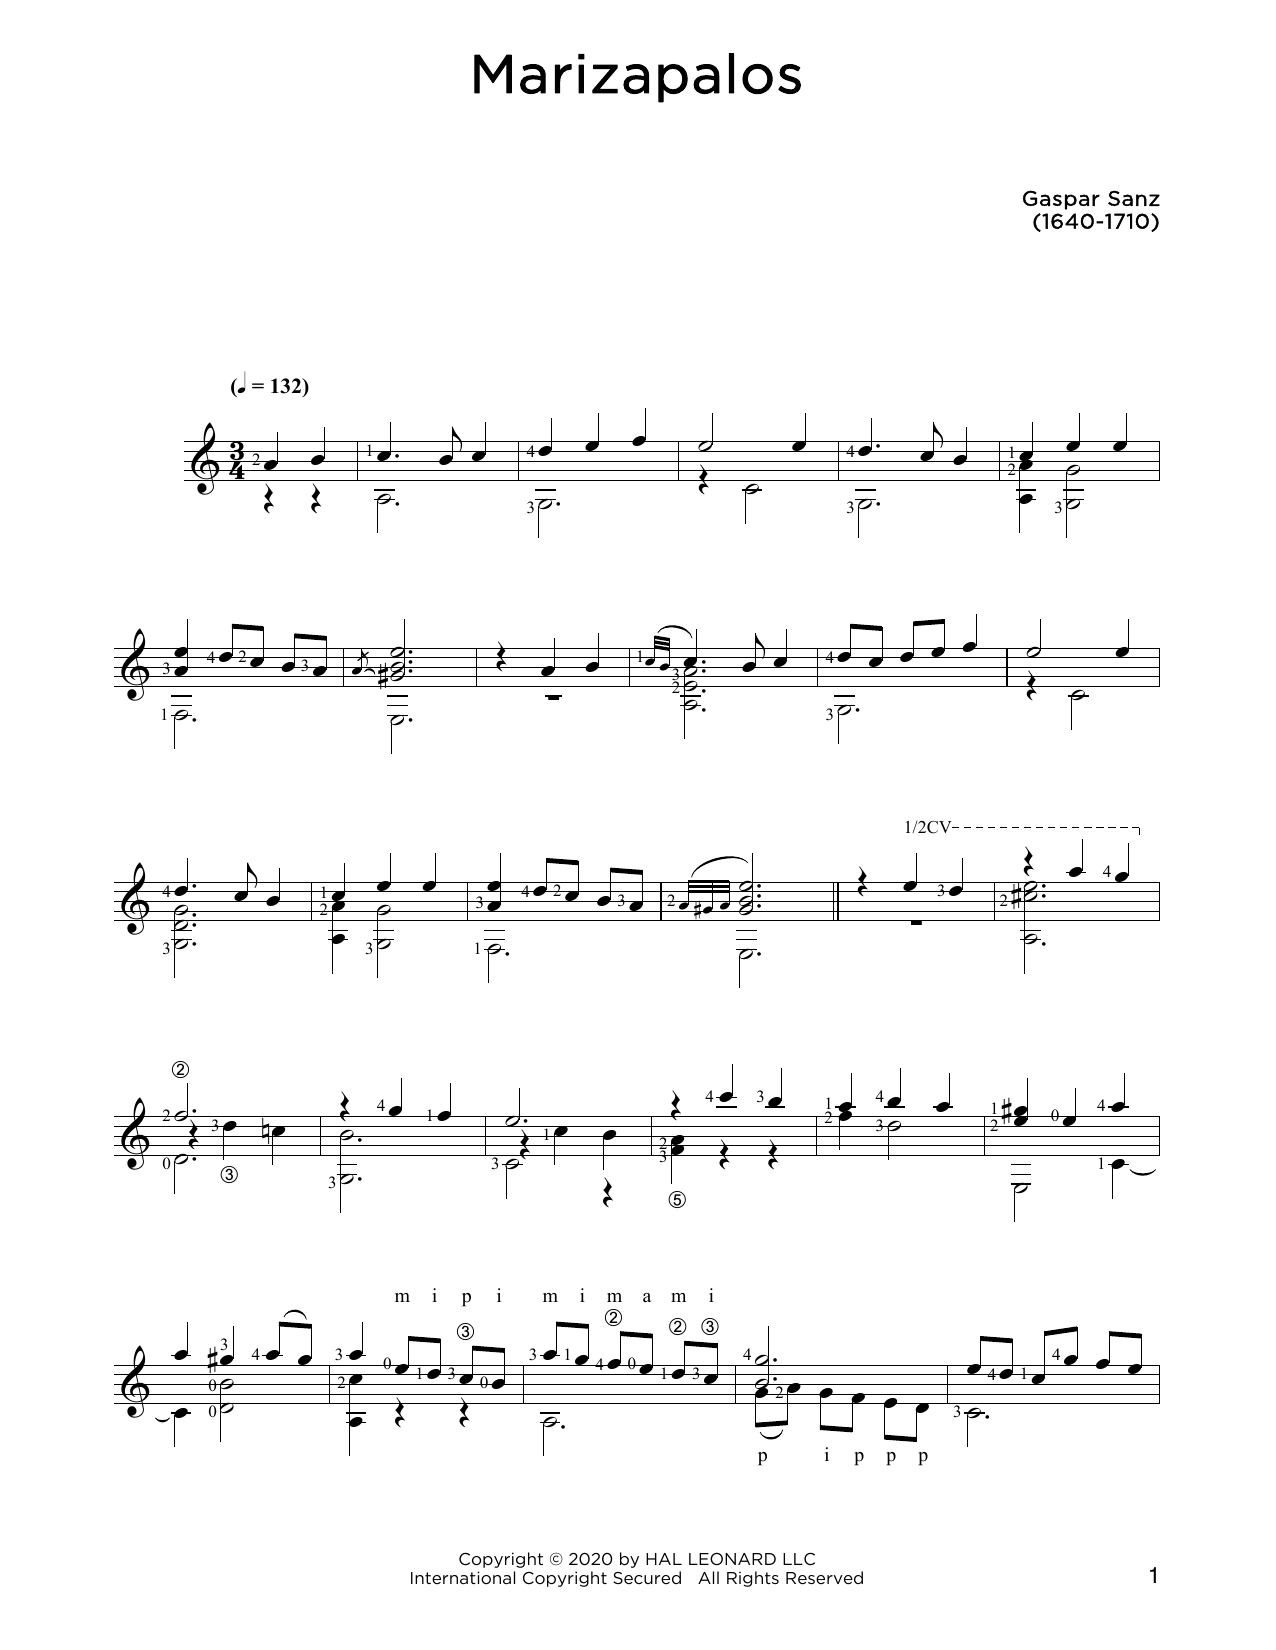 Gaspar Sanz Marizapalos Sheet Music Notes & Chords for Solo Guitar - Download or Print PDF